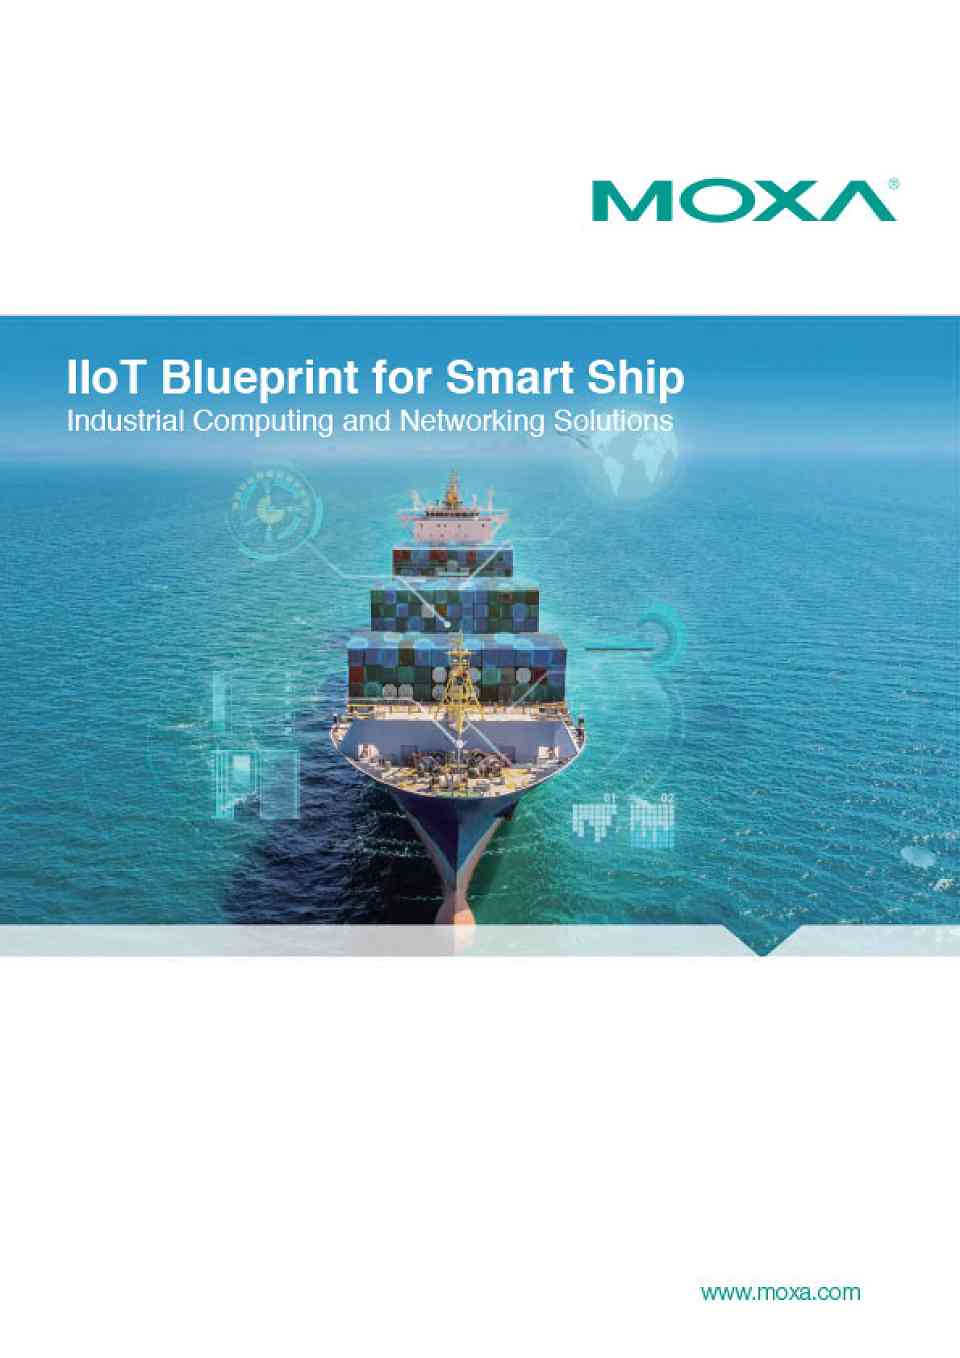 IIoT Blueprint for Smart Ship Catalogue Cover